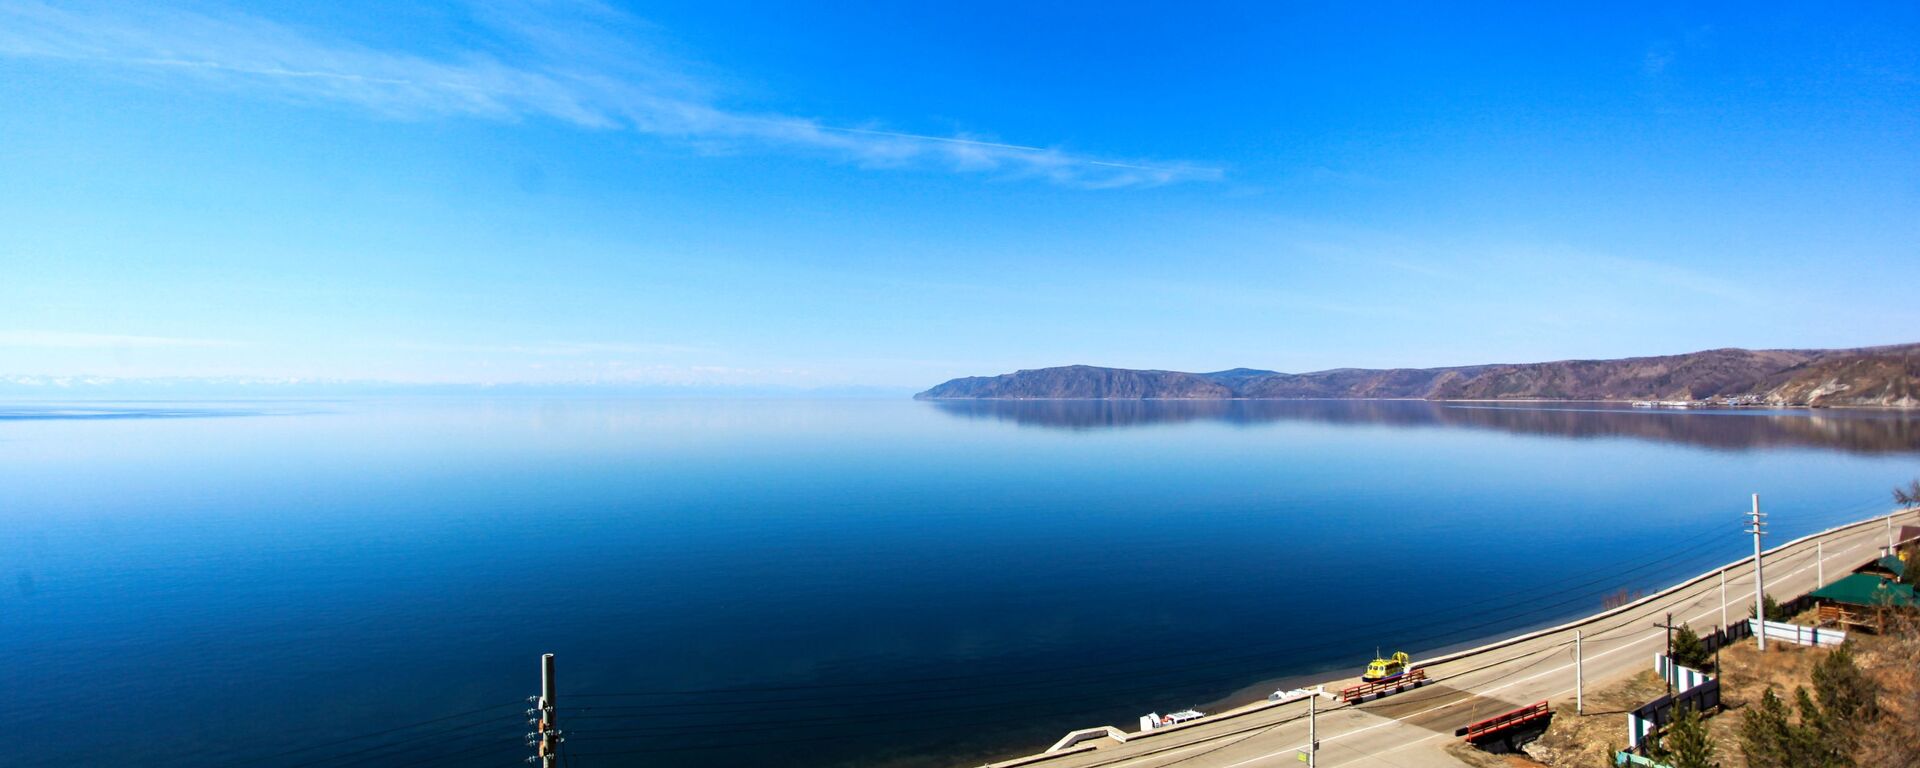 Hồ Baikal vào xuân - Sputnik Việt Nam, 1920, 10.05.2020